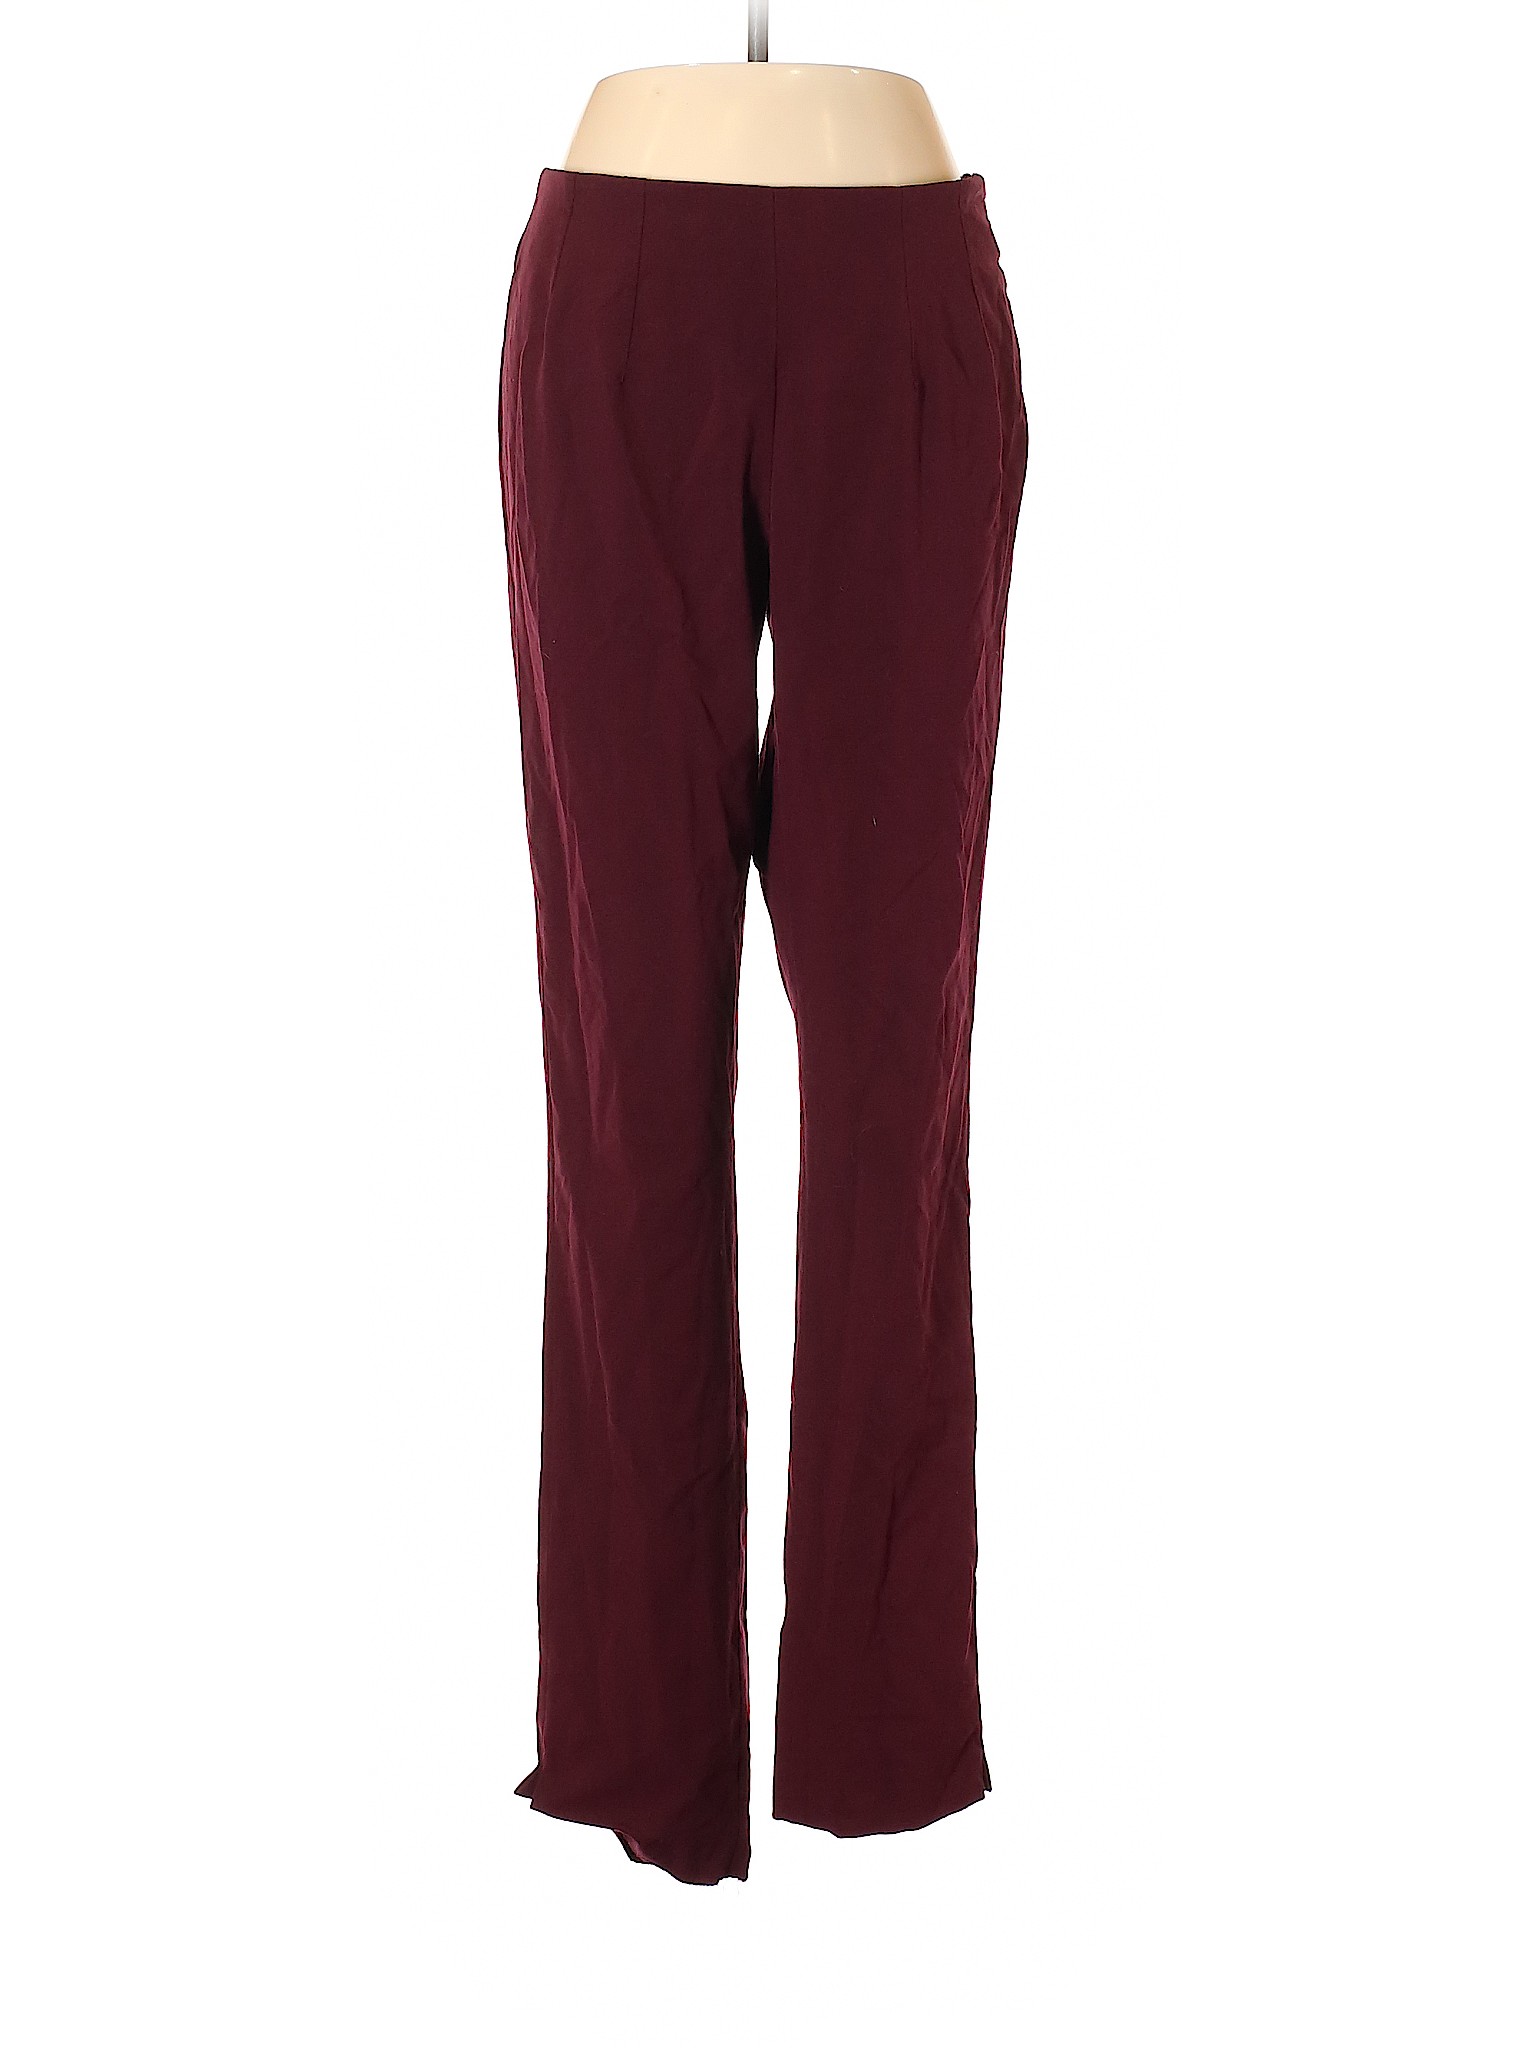 Amanda + Chelsea Women Purple Dress Pants 8 | eBay